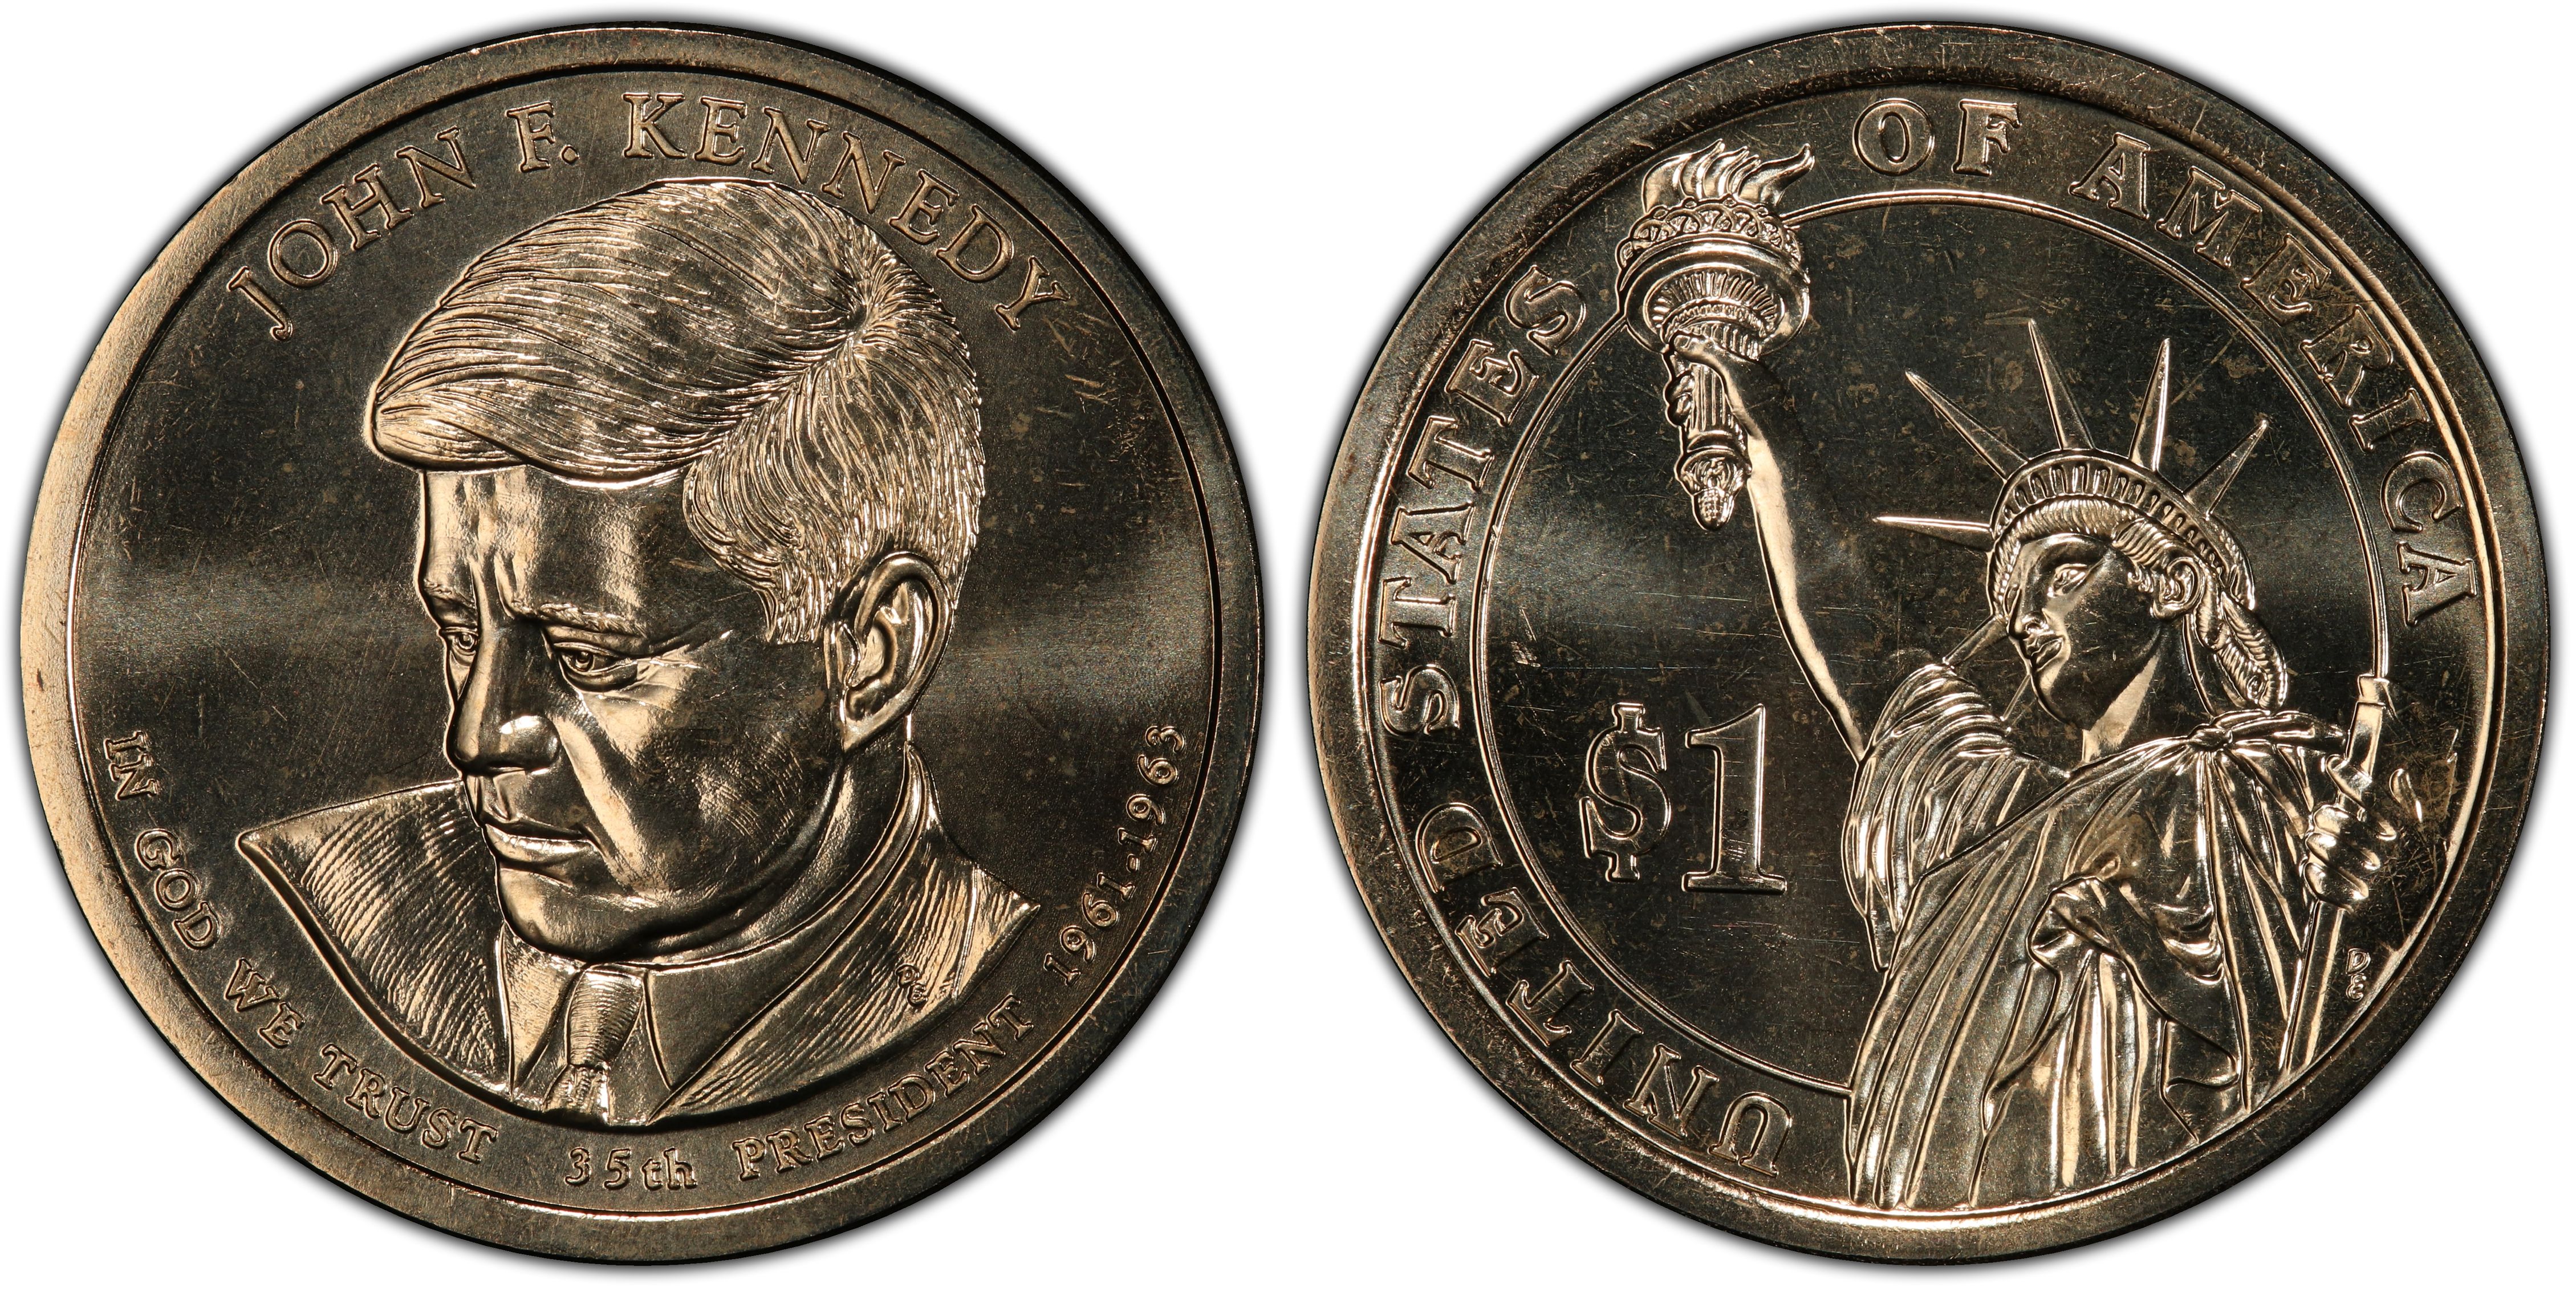 Mint Rolls Money 2015 P John F Kennedy Presidential One Dollar Coin from U.S 